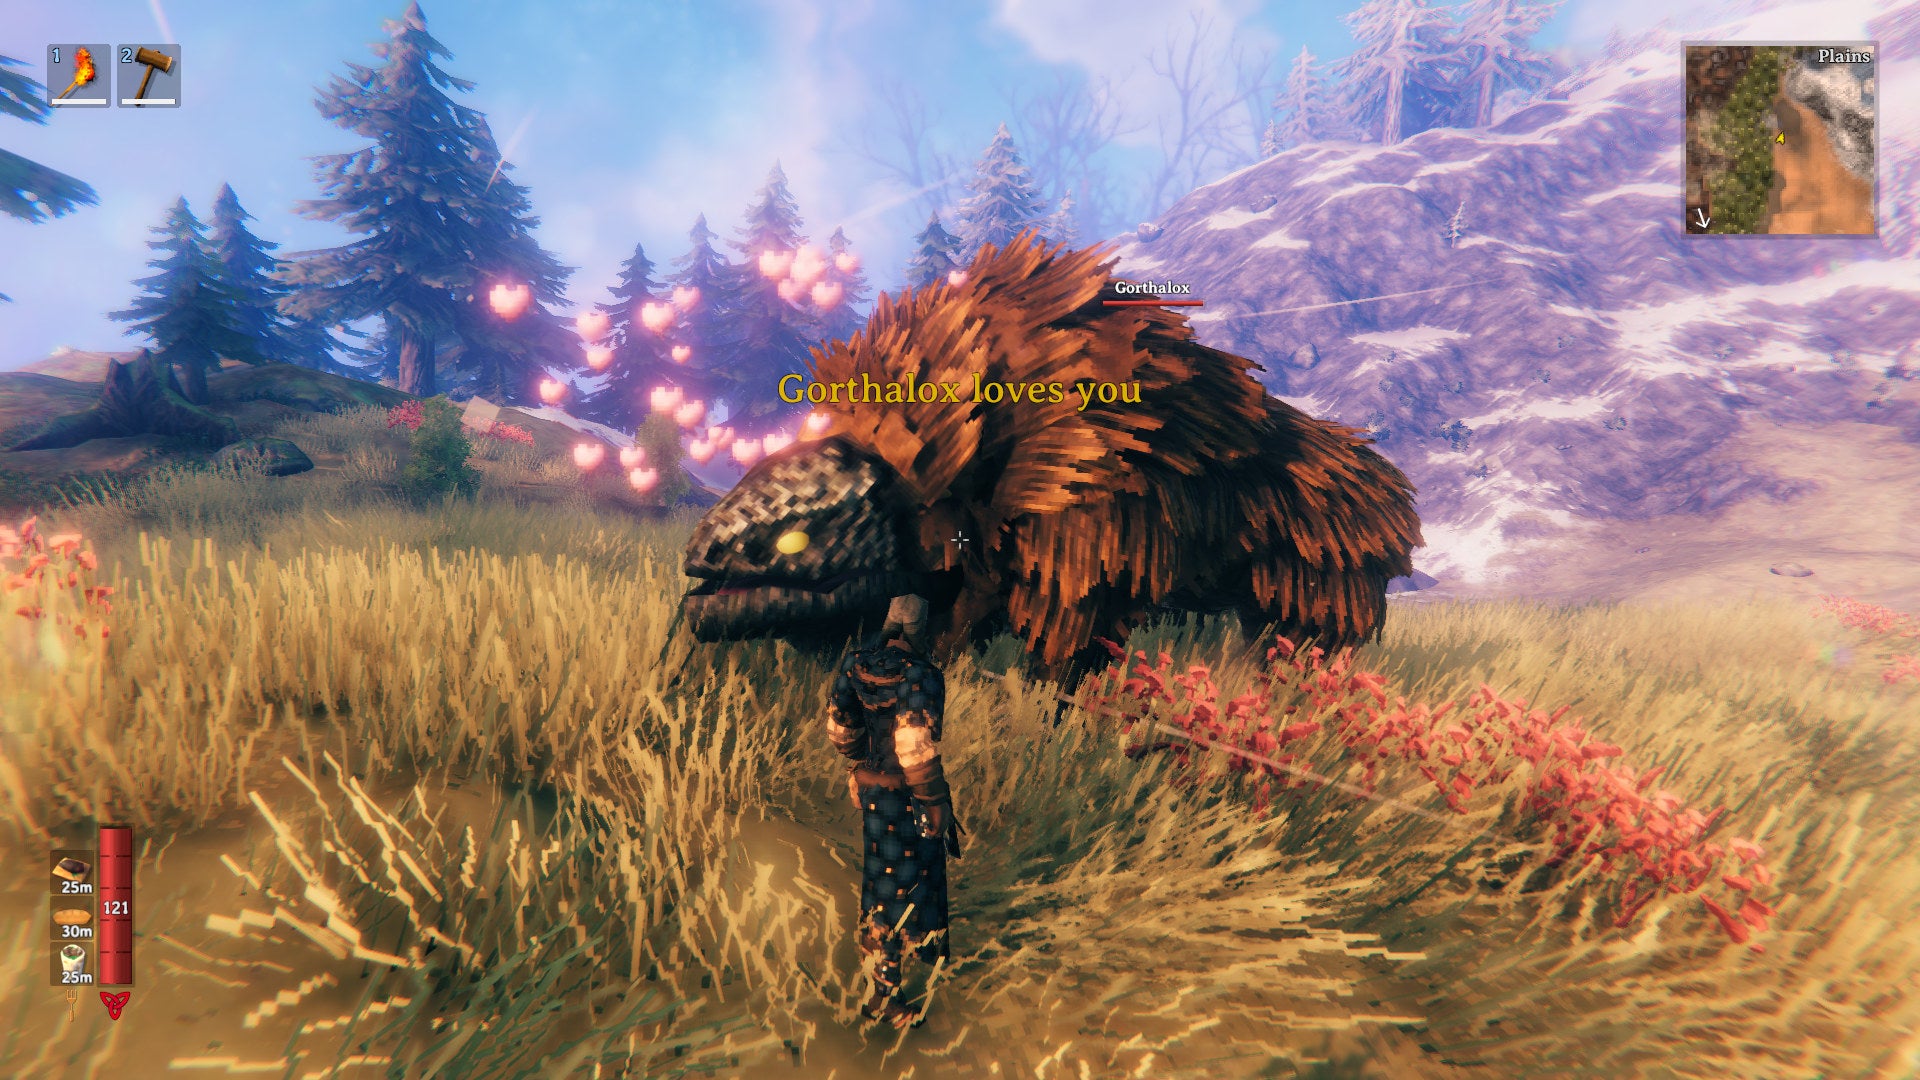 A friendly named lox in a Valheim: Hearth & Home update screenshot.